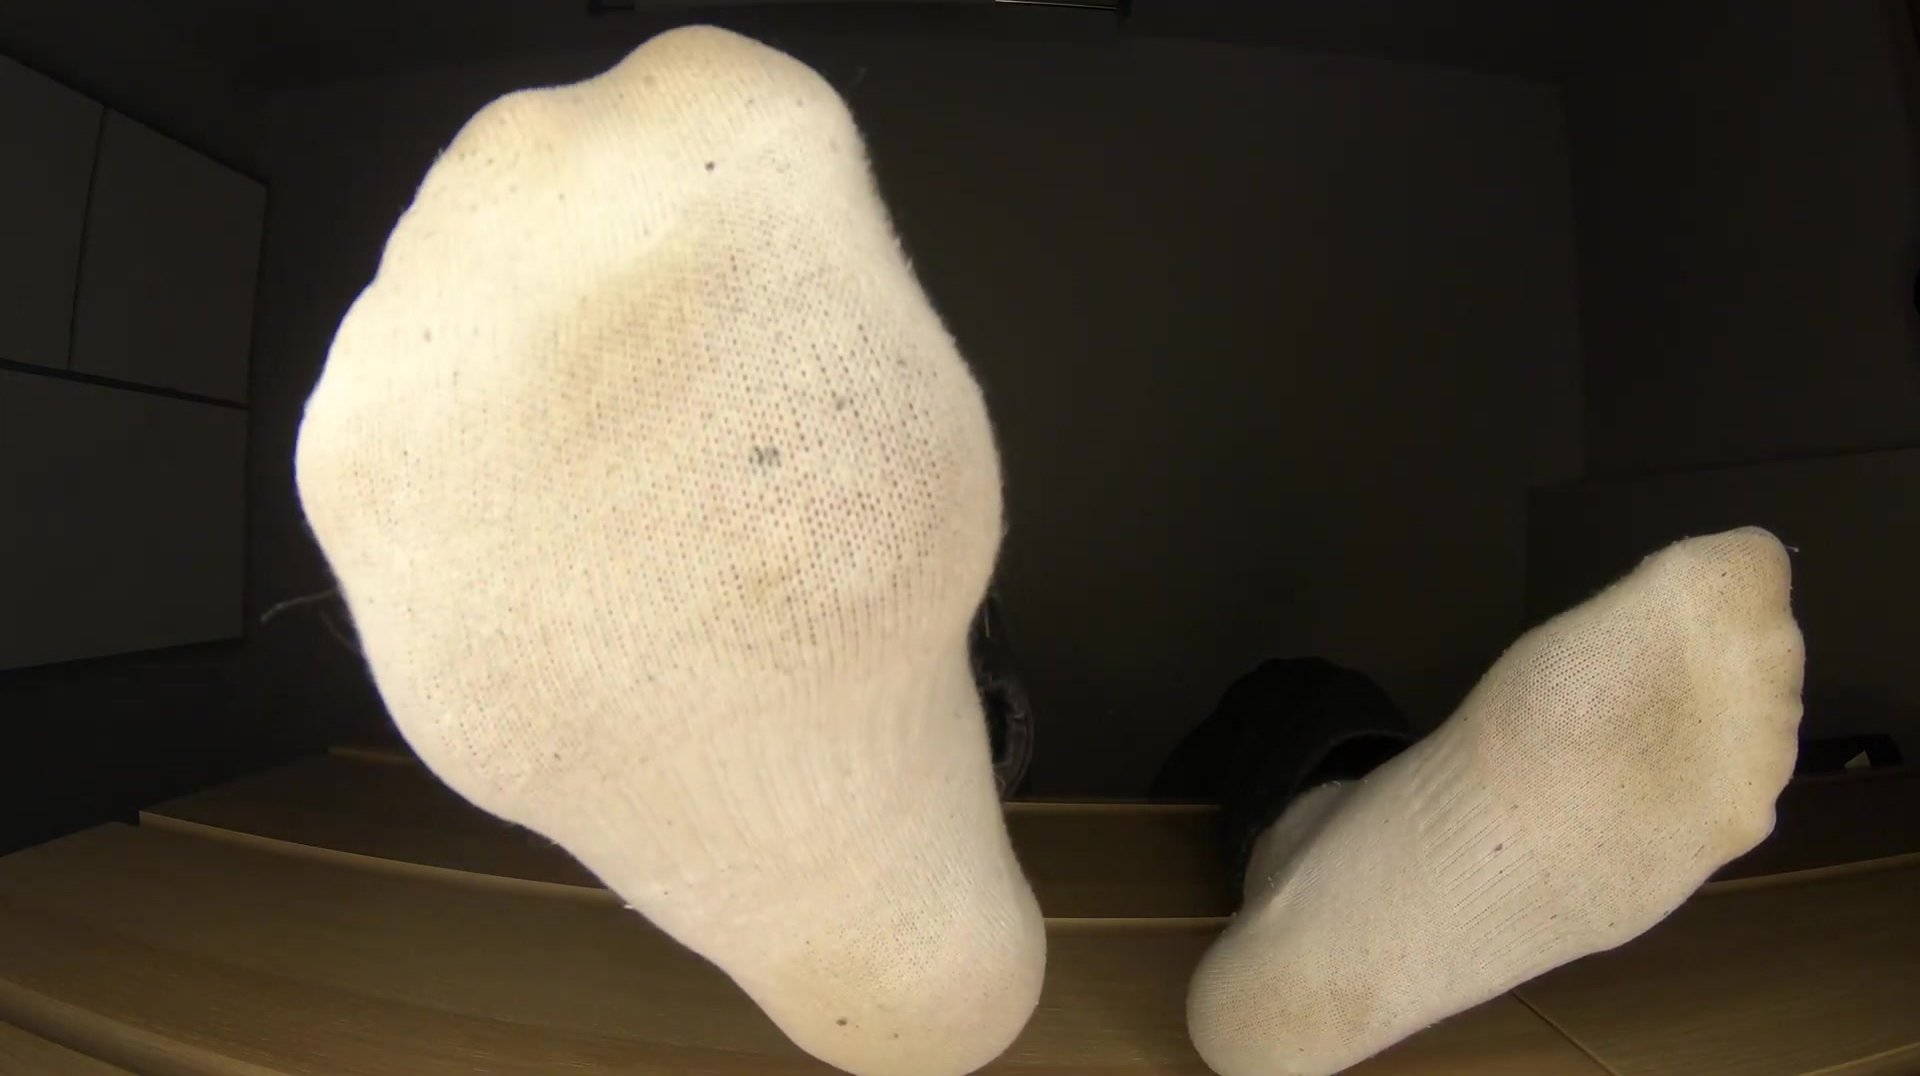 POV white sweaty socks